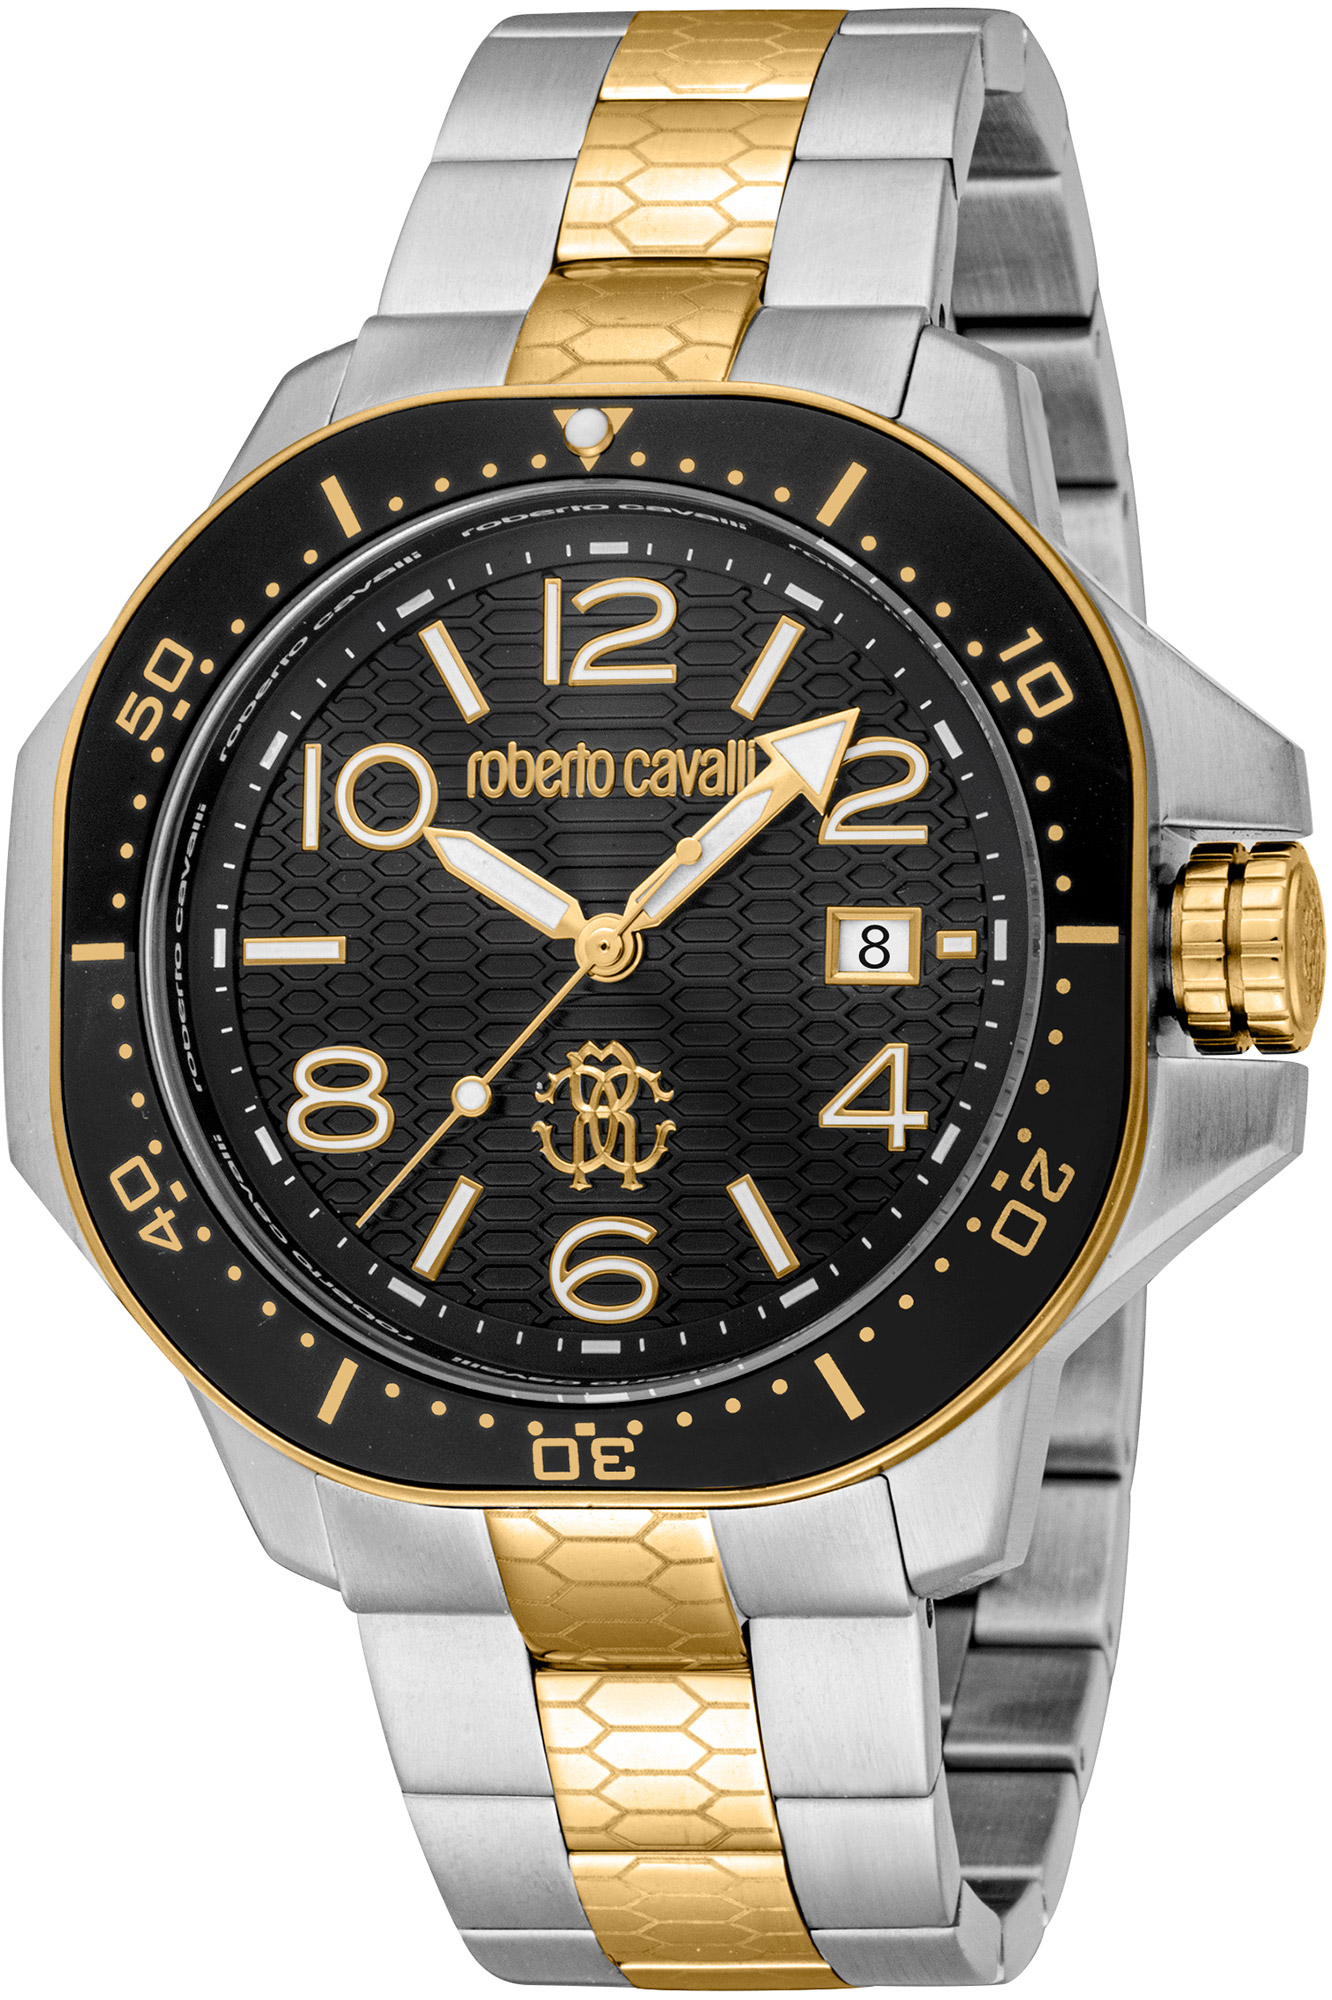 Reloj Roberto Cavalli rc5g101m0065